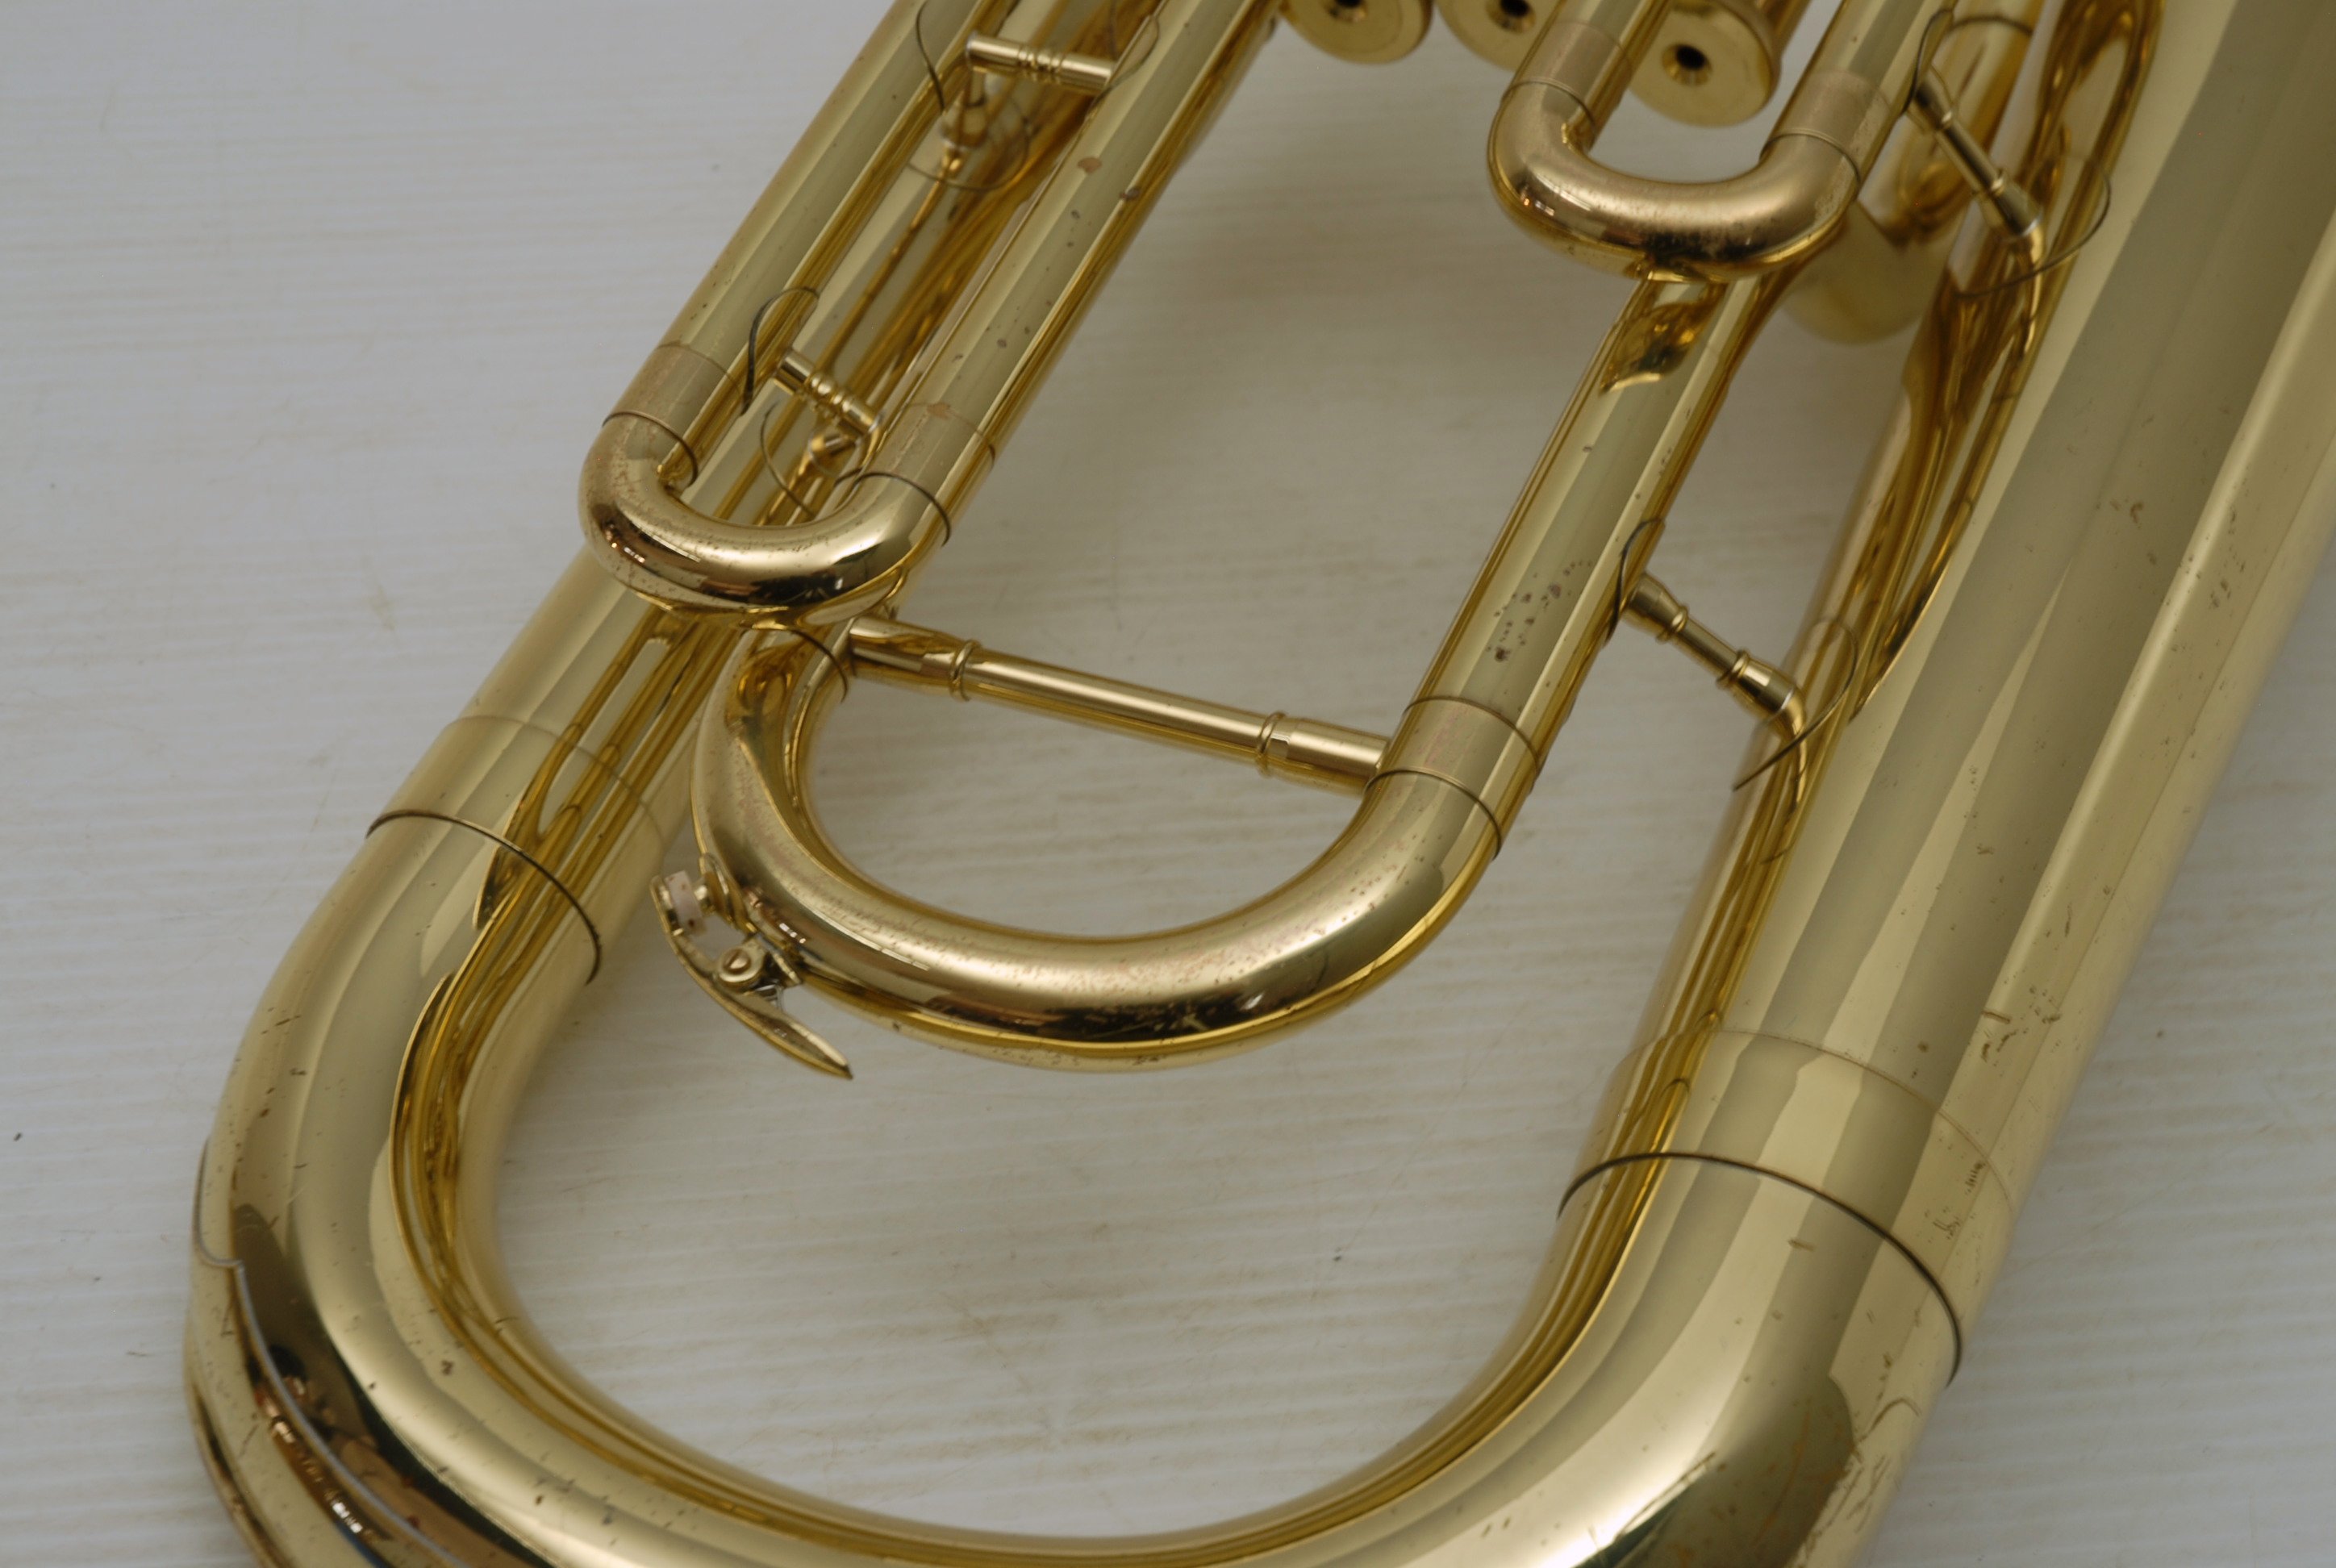  Yamaha  YEP  201  Euphonium  Brass Exchange